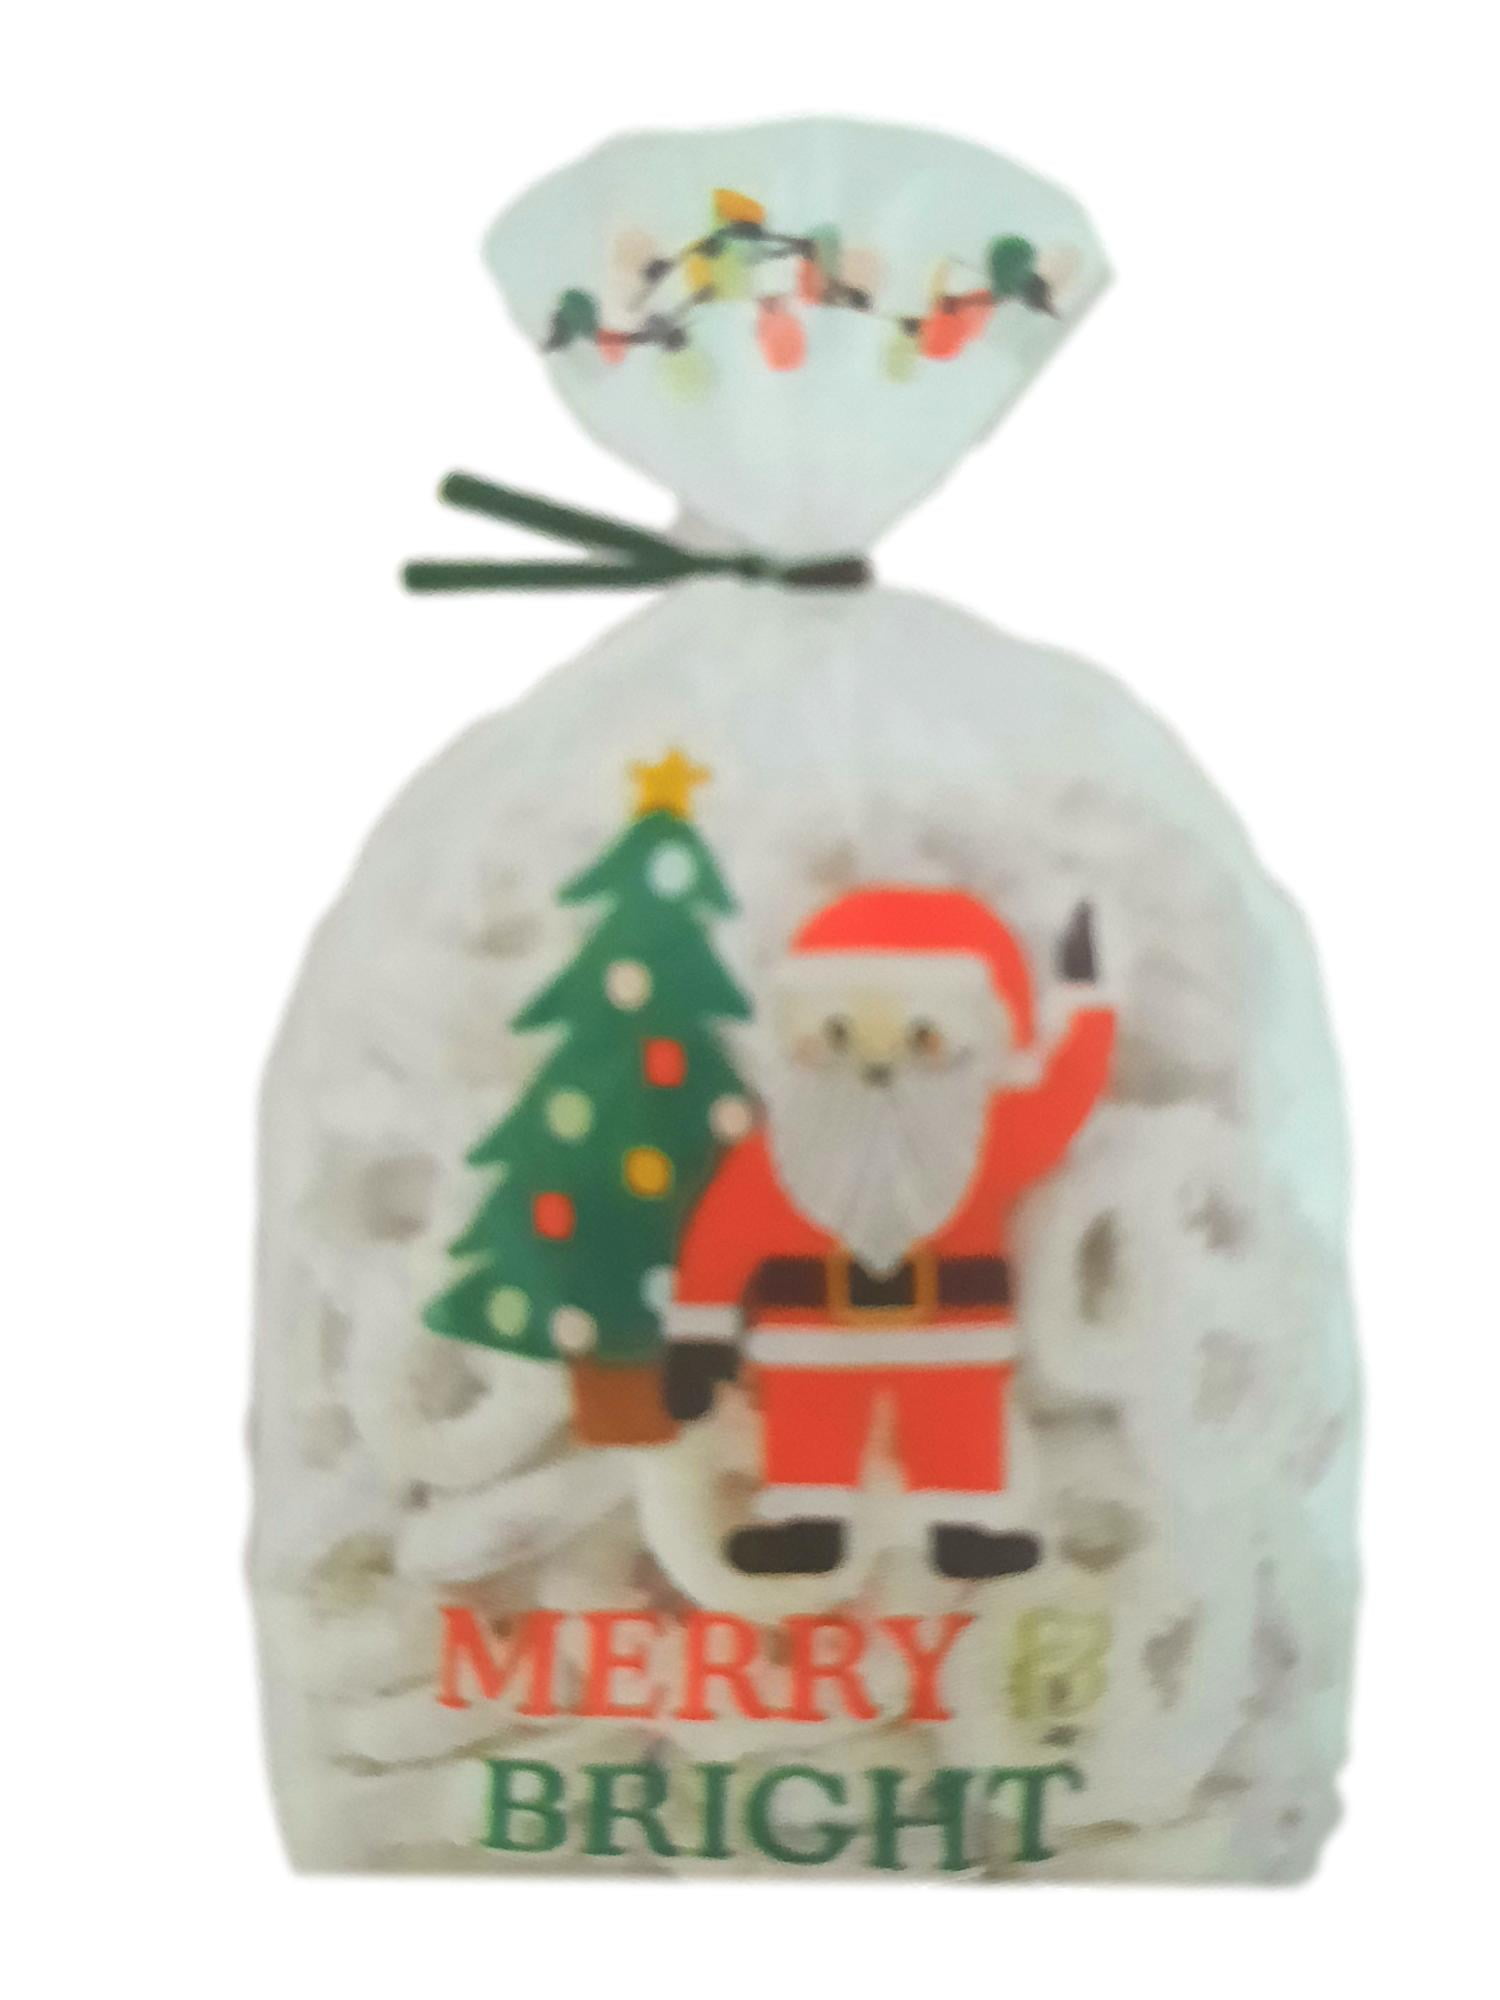 Green Christmas Tree Resealable Treat Sandwich Bags 20 Ct Wilton